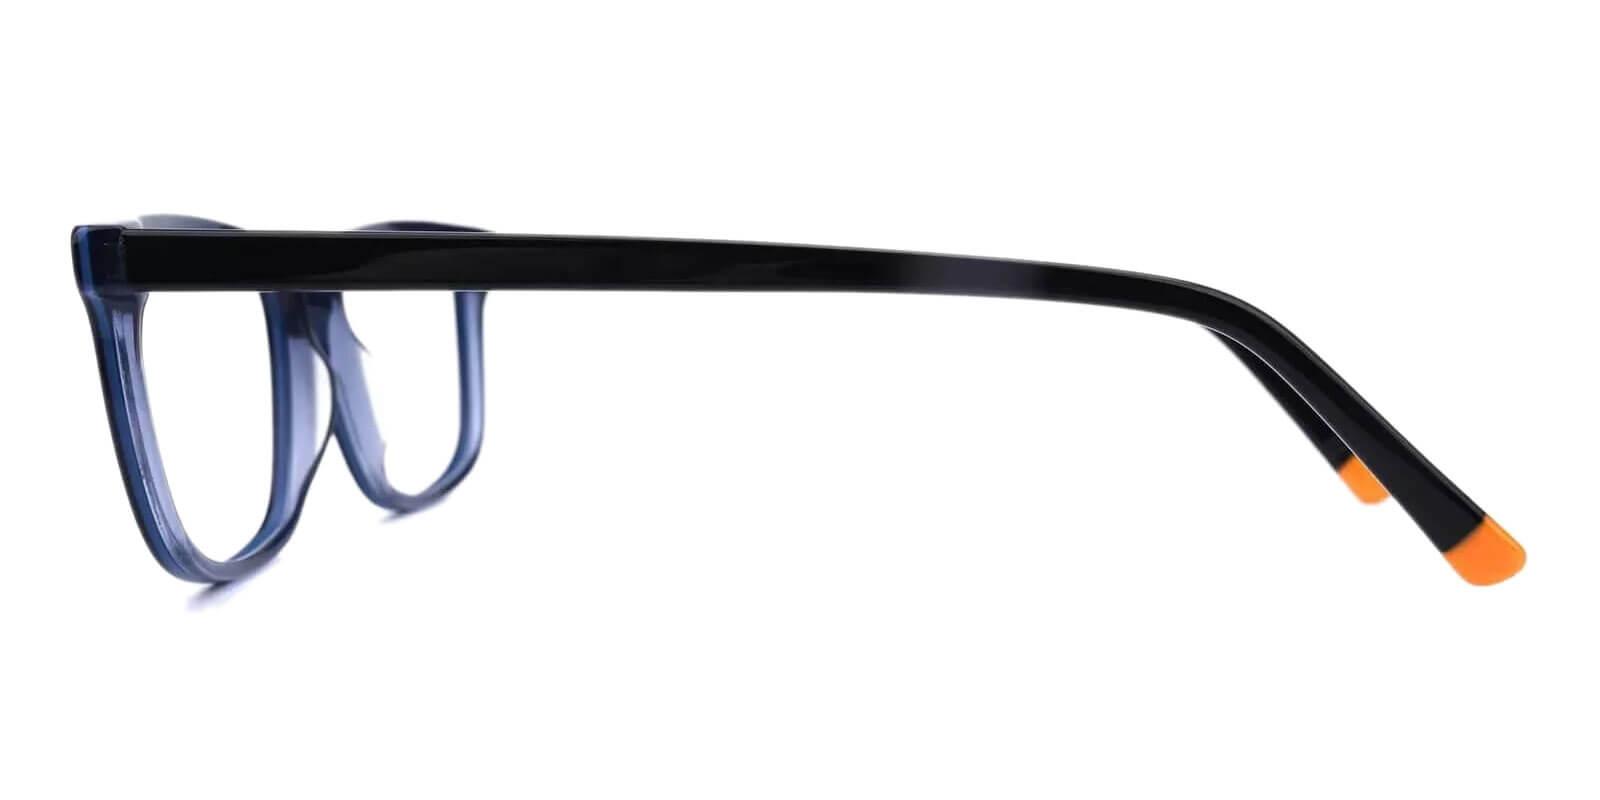 Leupp Corner Blue Acetate Eyeglasses , UniversalBridgeFit , SpringHinges Frames from ABBE Glasses